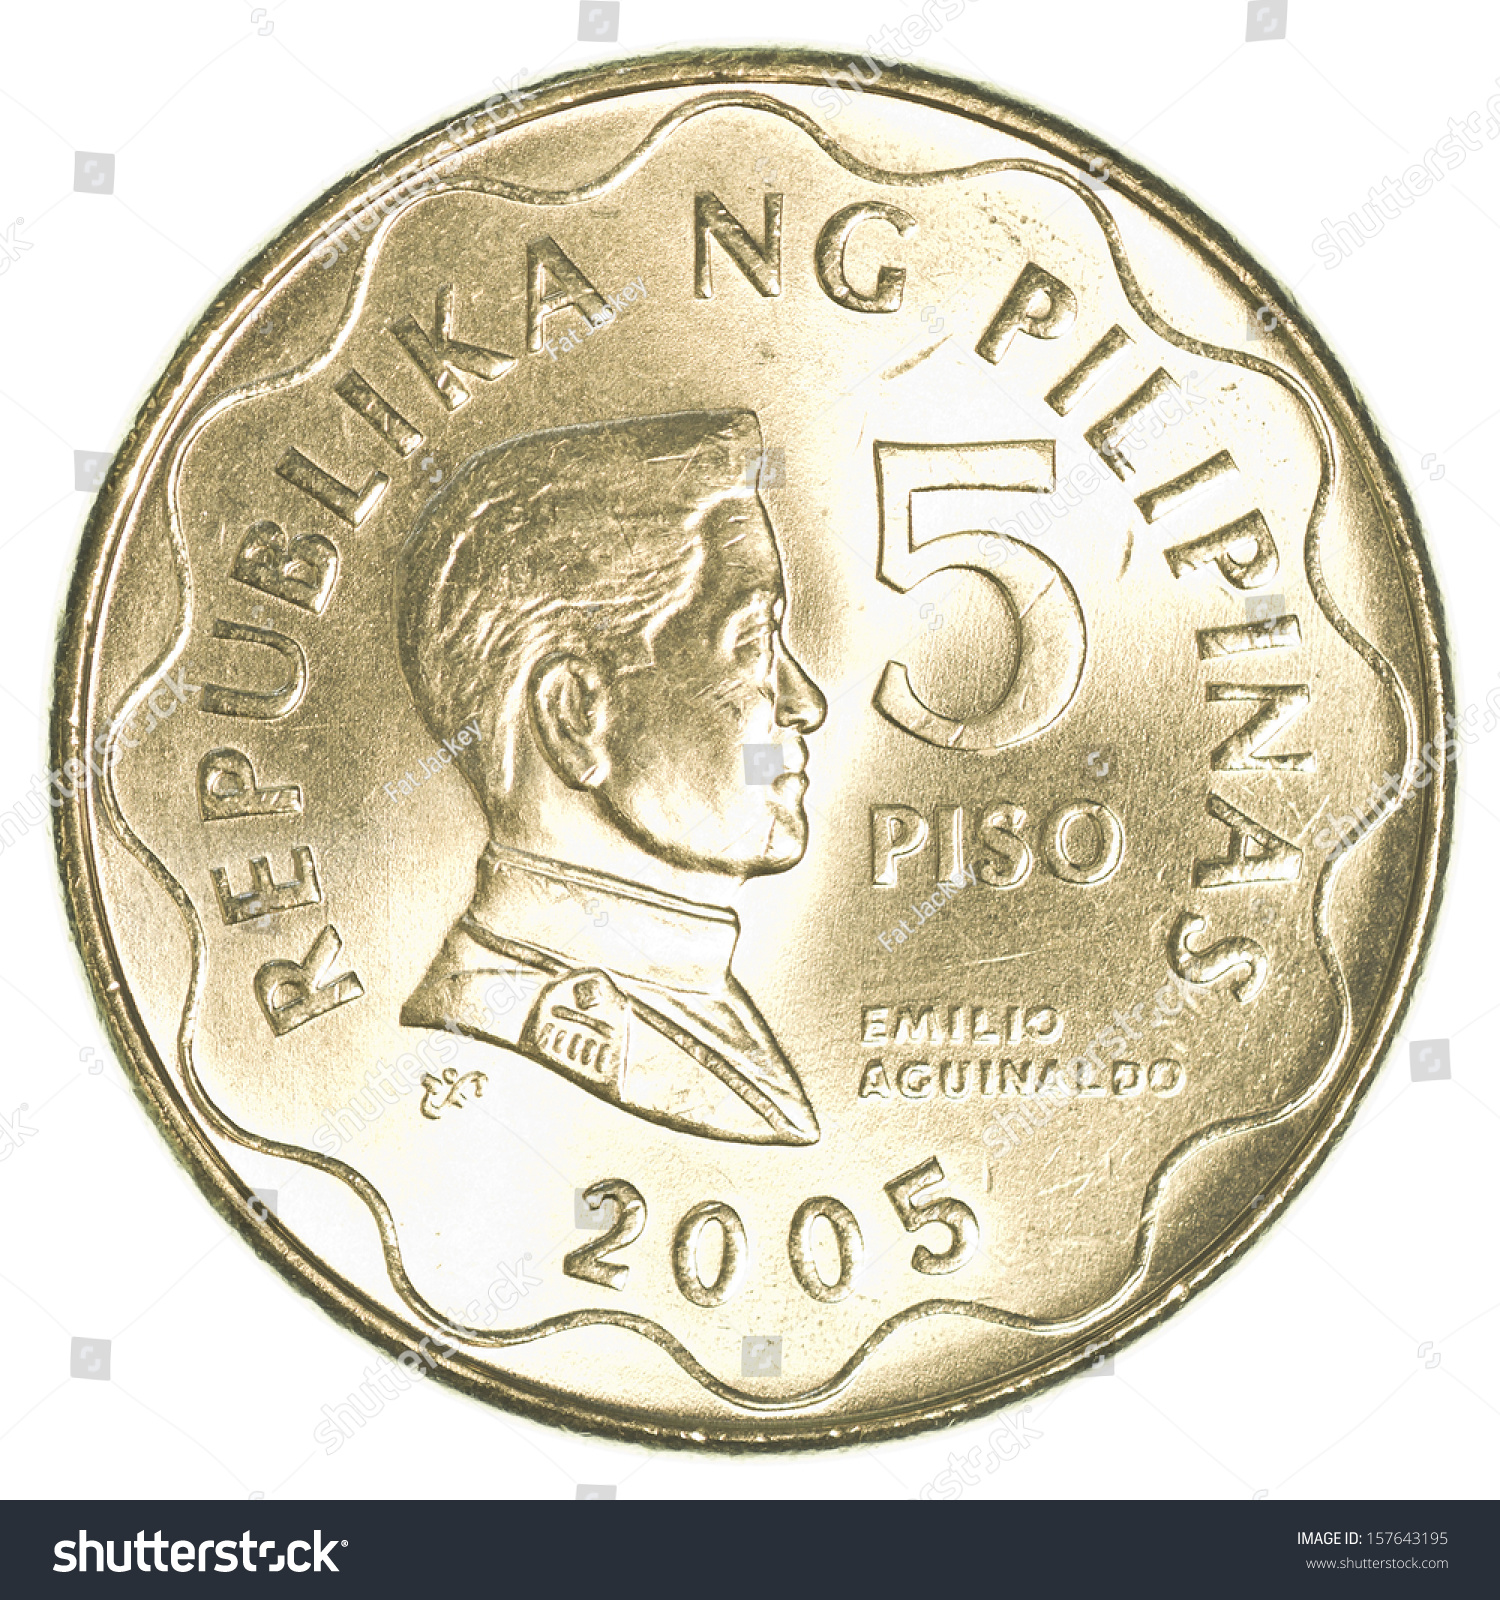 philippine money clipart - photo #30